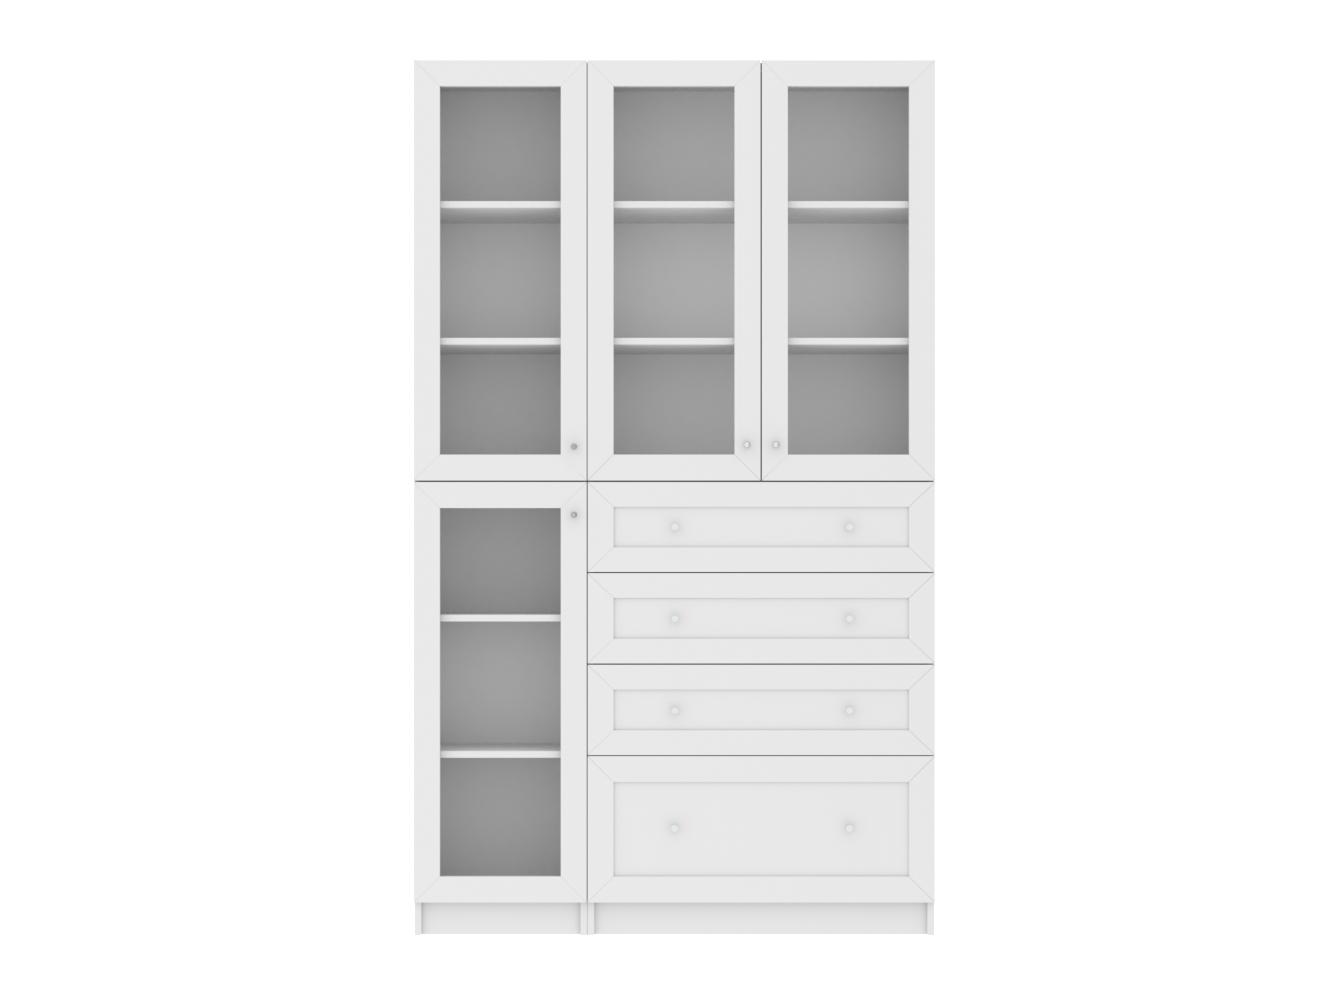 Книжный шкаф Билли 358 white ИКЕА (IKEA) изображение товара